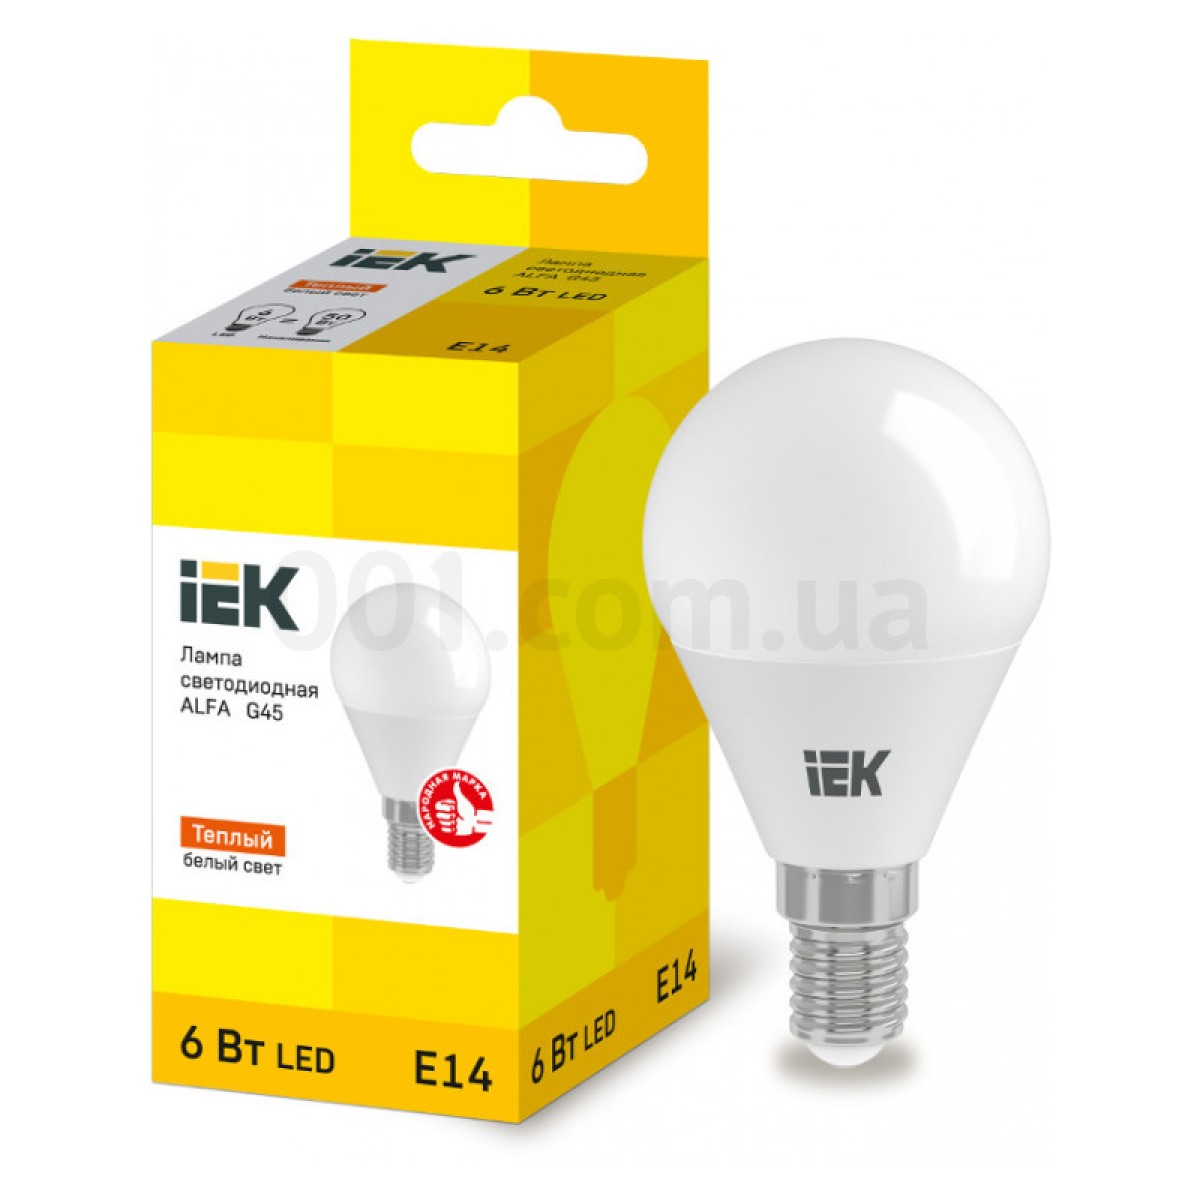 Светодиодная лампа LED ALFA G45 (шар) 6 Вт 230В 3000К E14, IEK 256_256.jpg